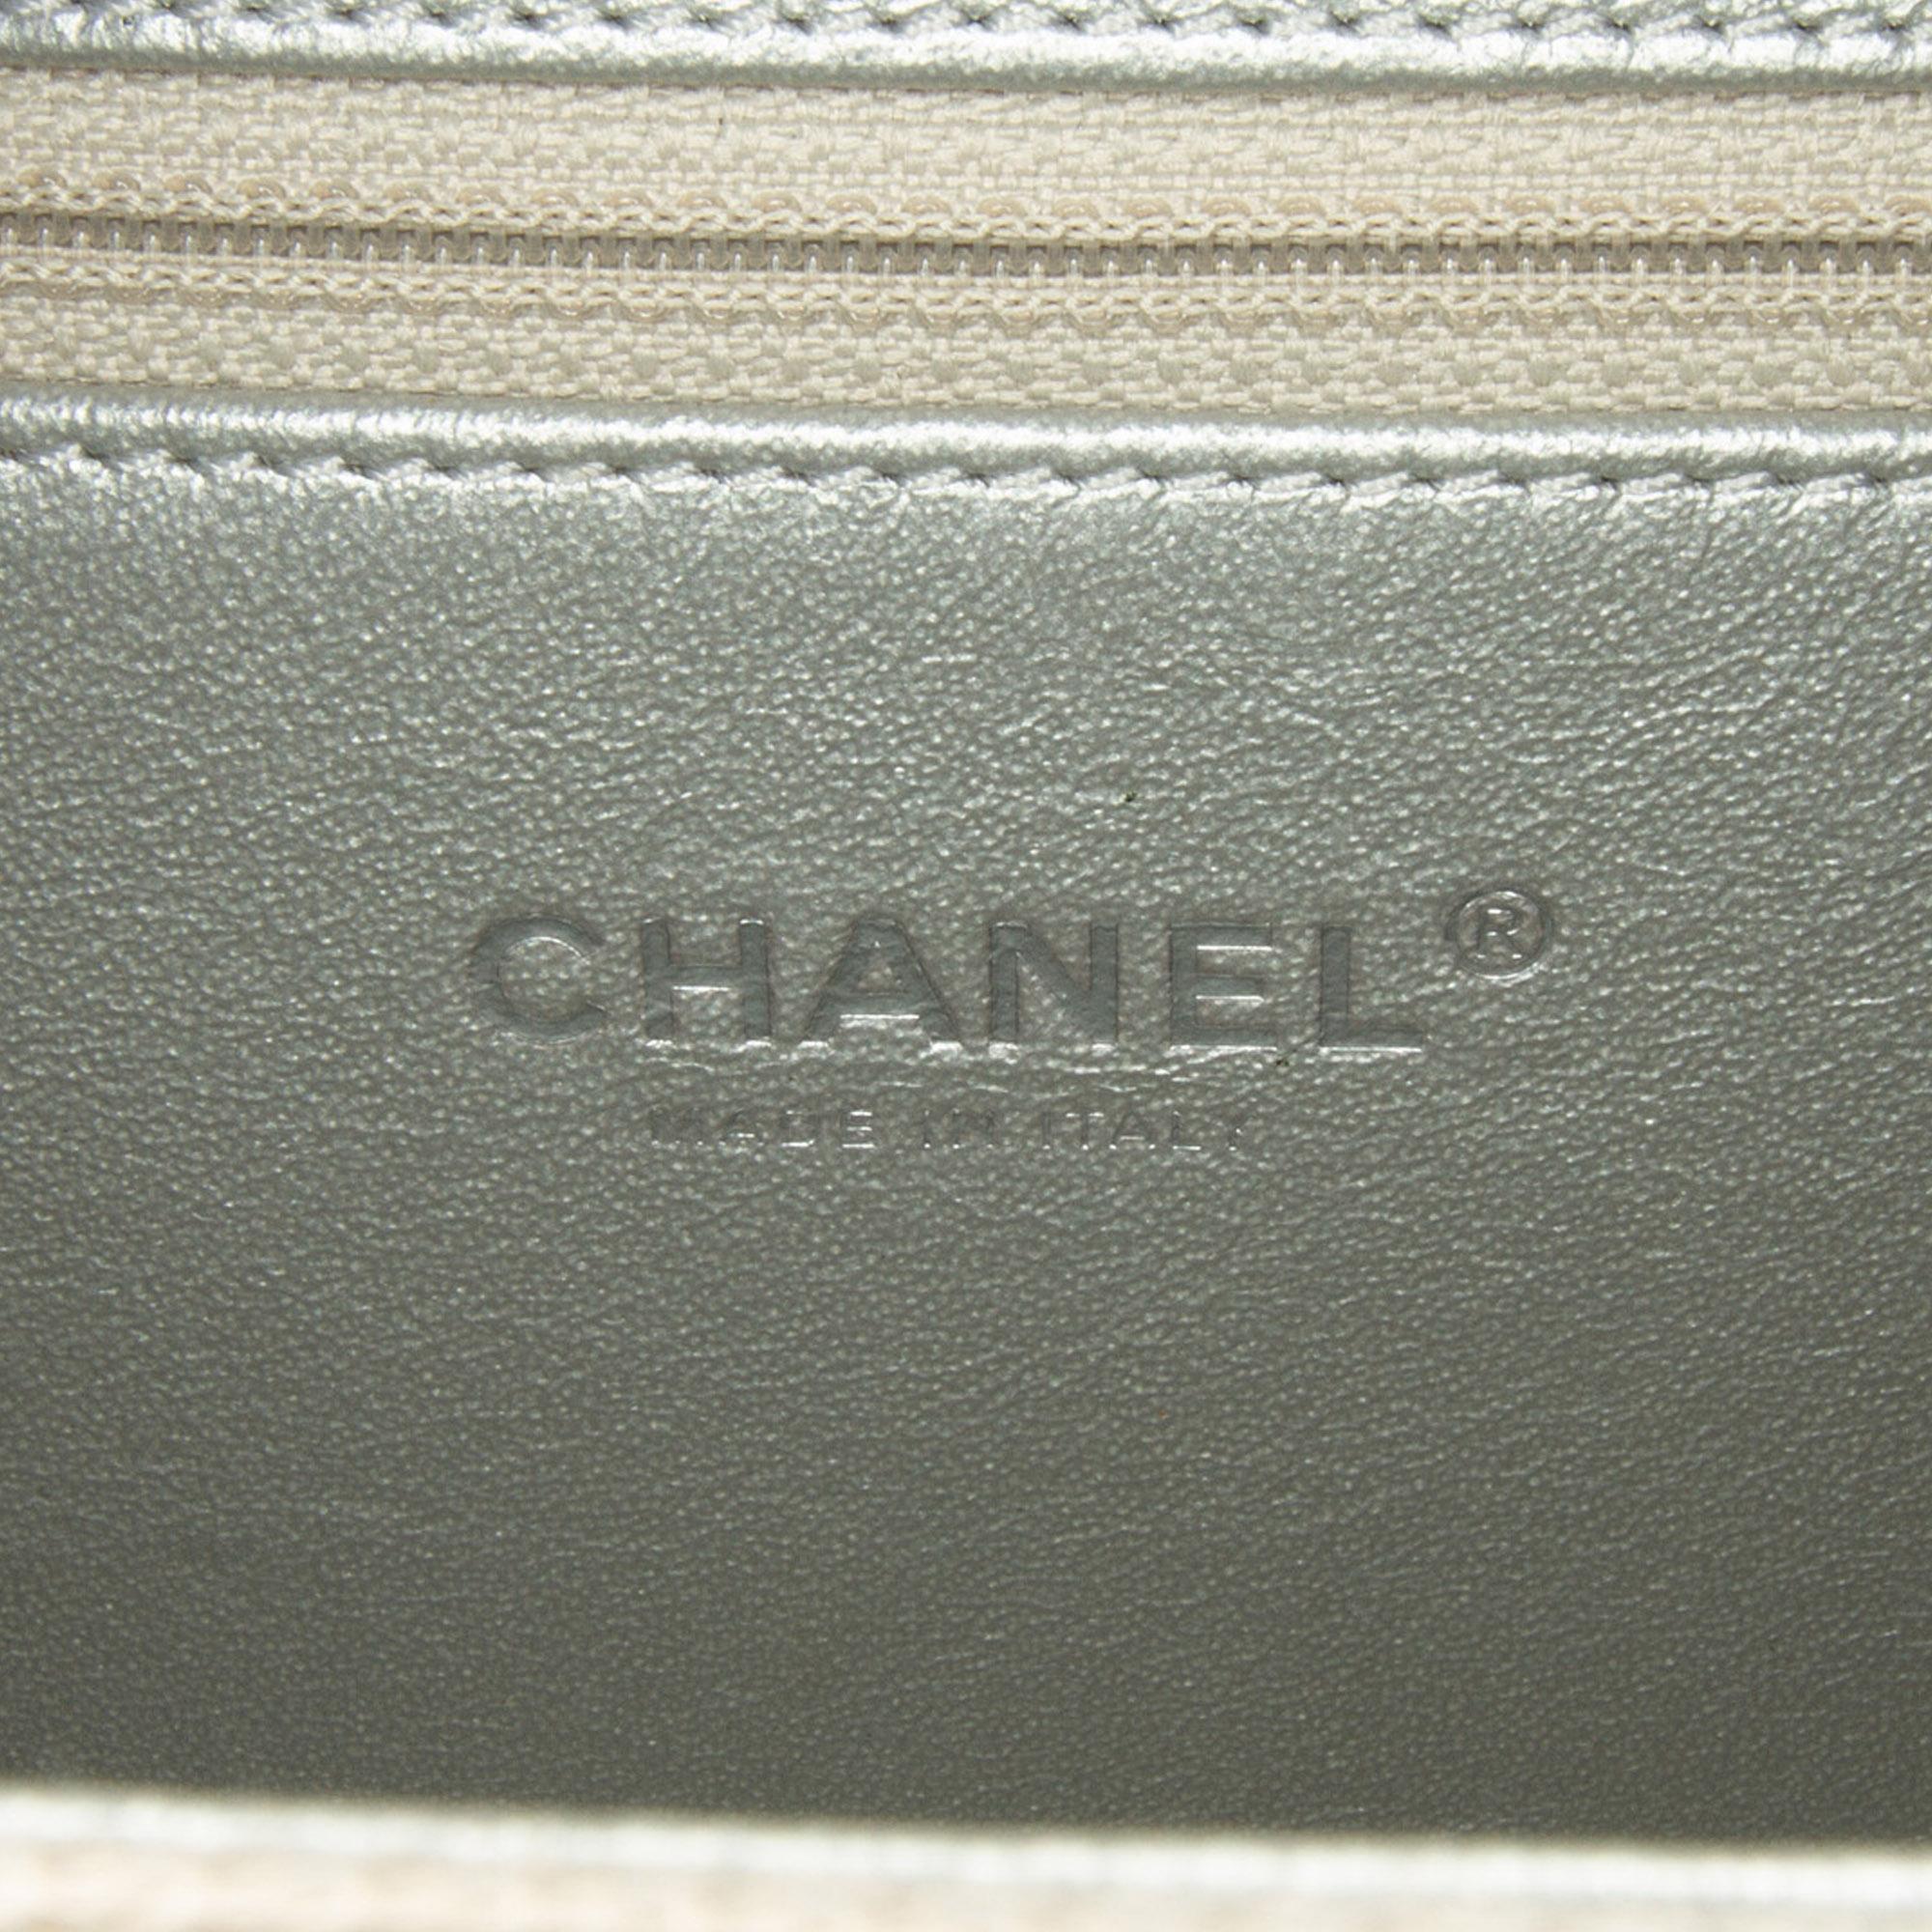 Chanel Silver Medium CC Filigree Caviar Vanity Case